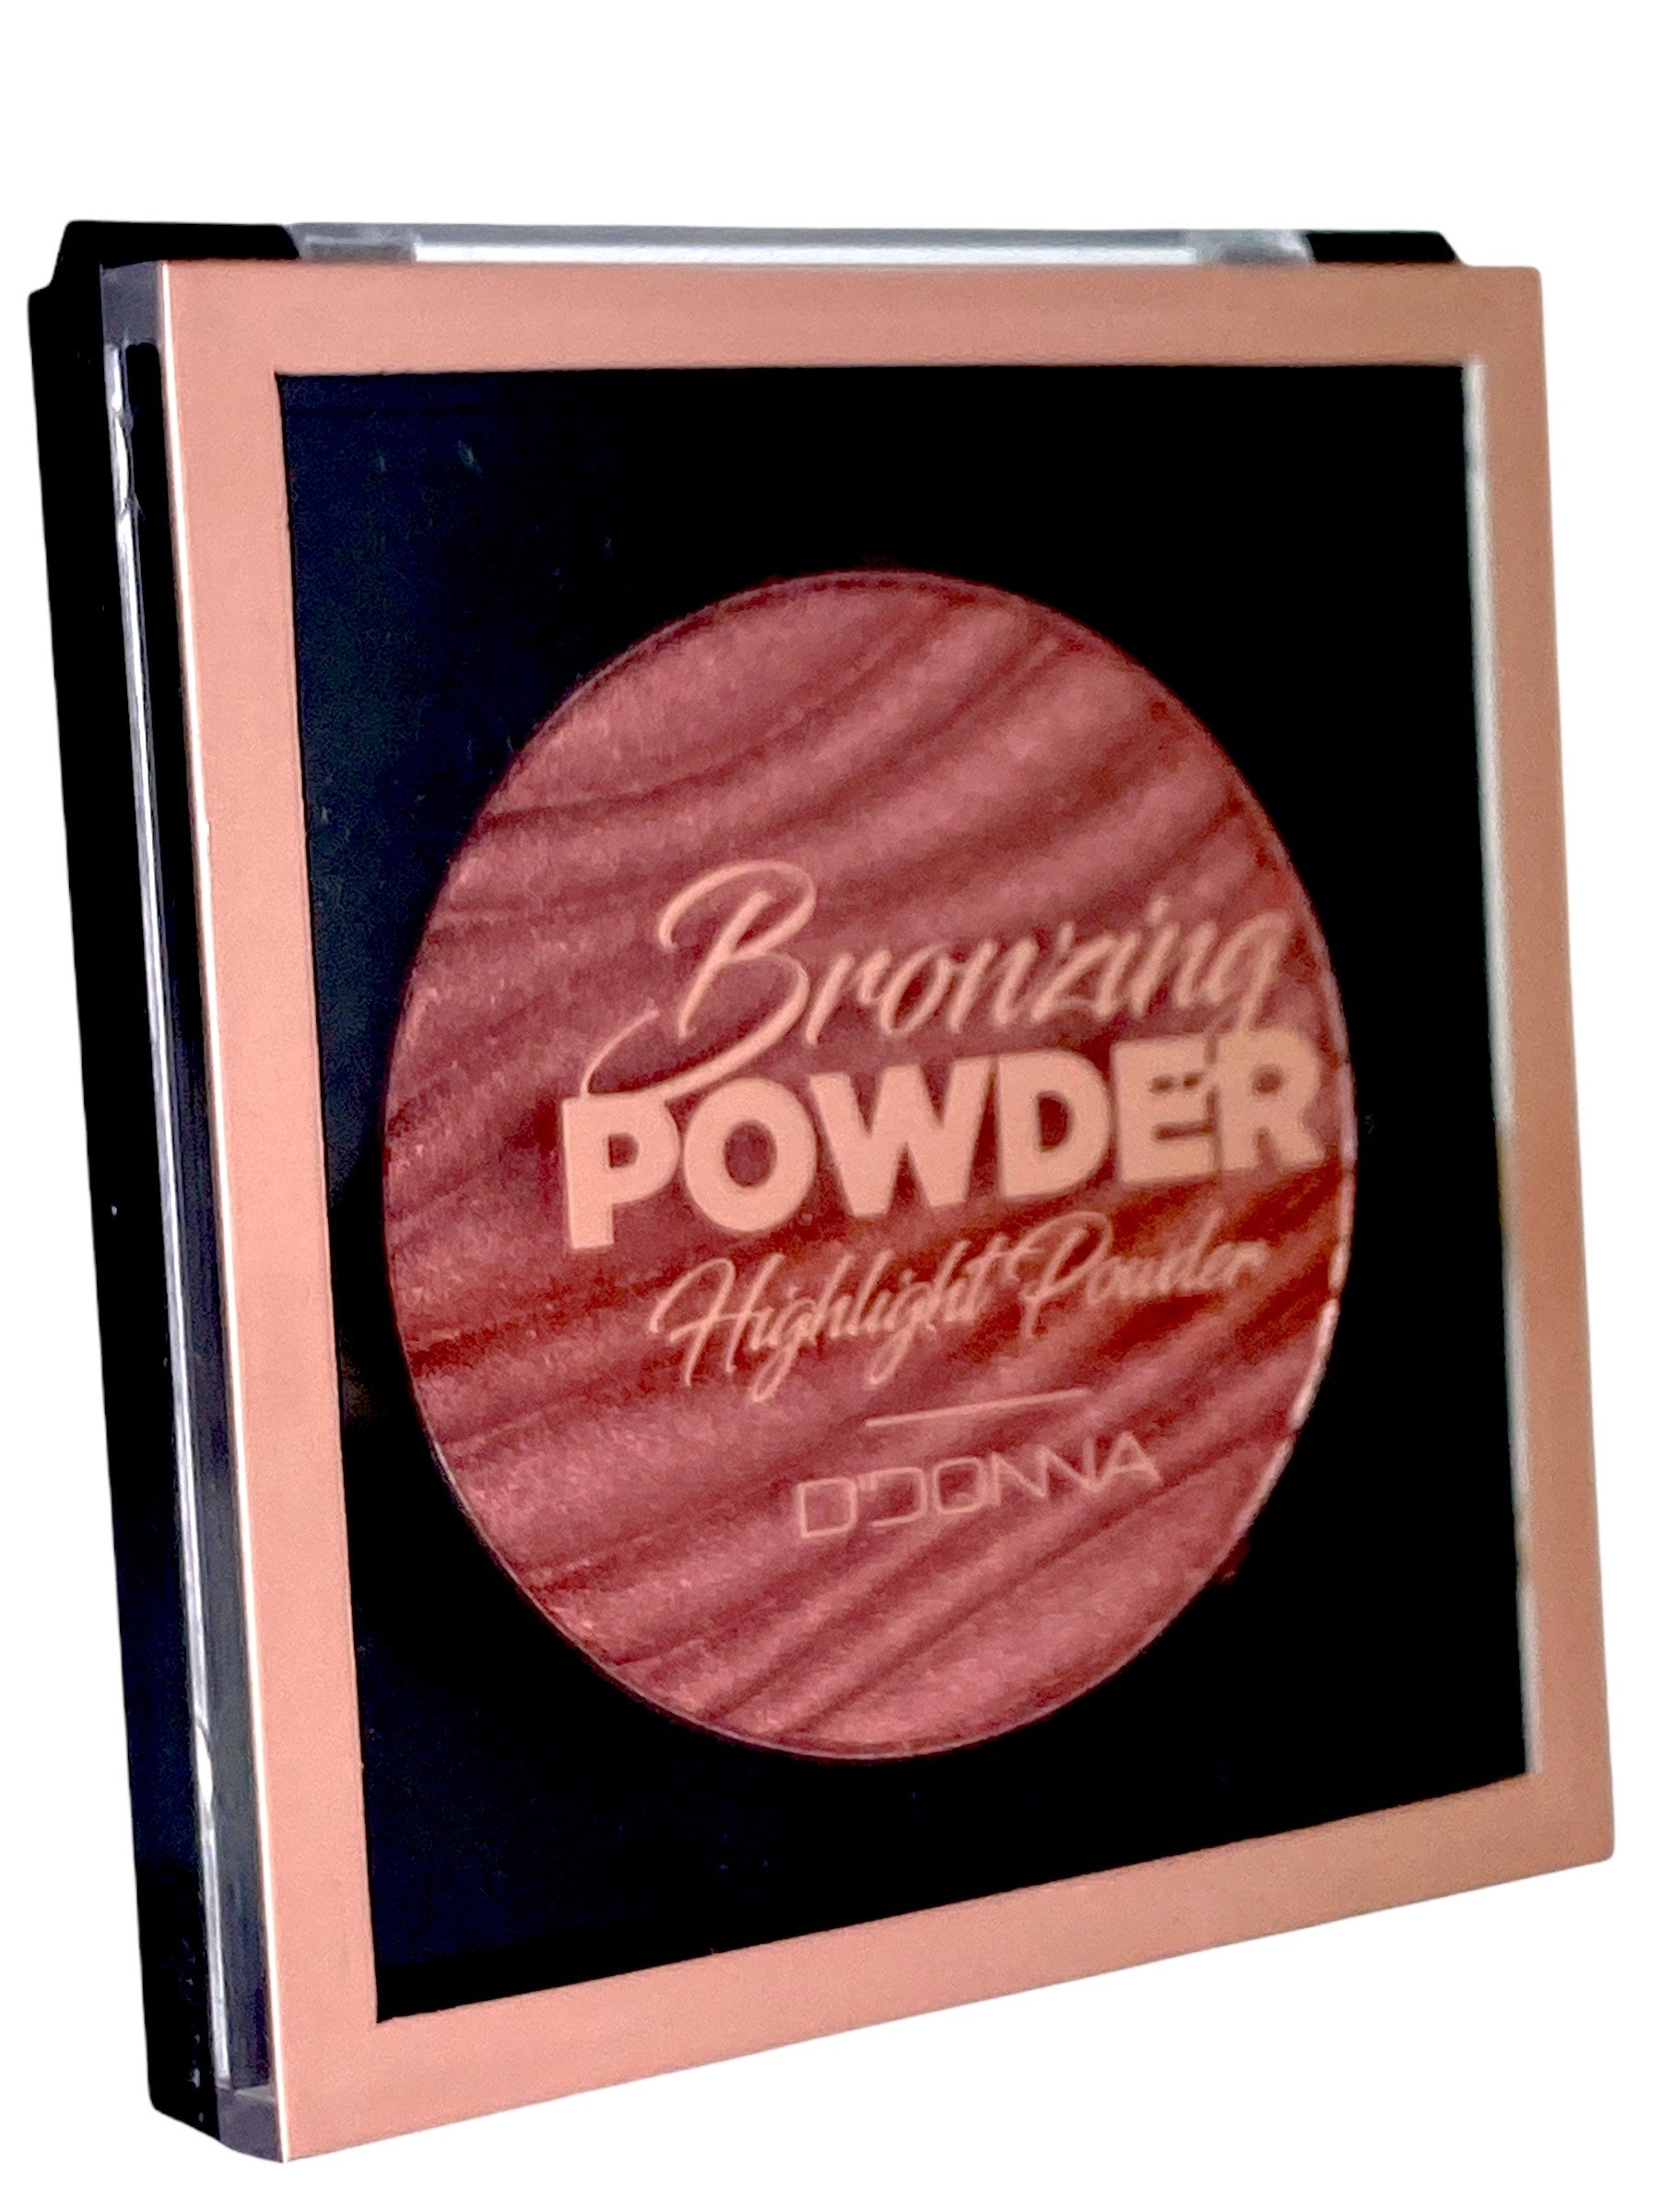 Polvo compacto bronzeador "Bronzing Powder" N 1 - D'Donna